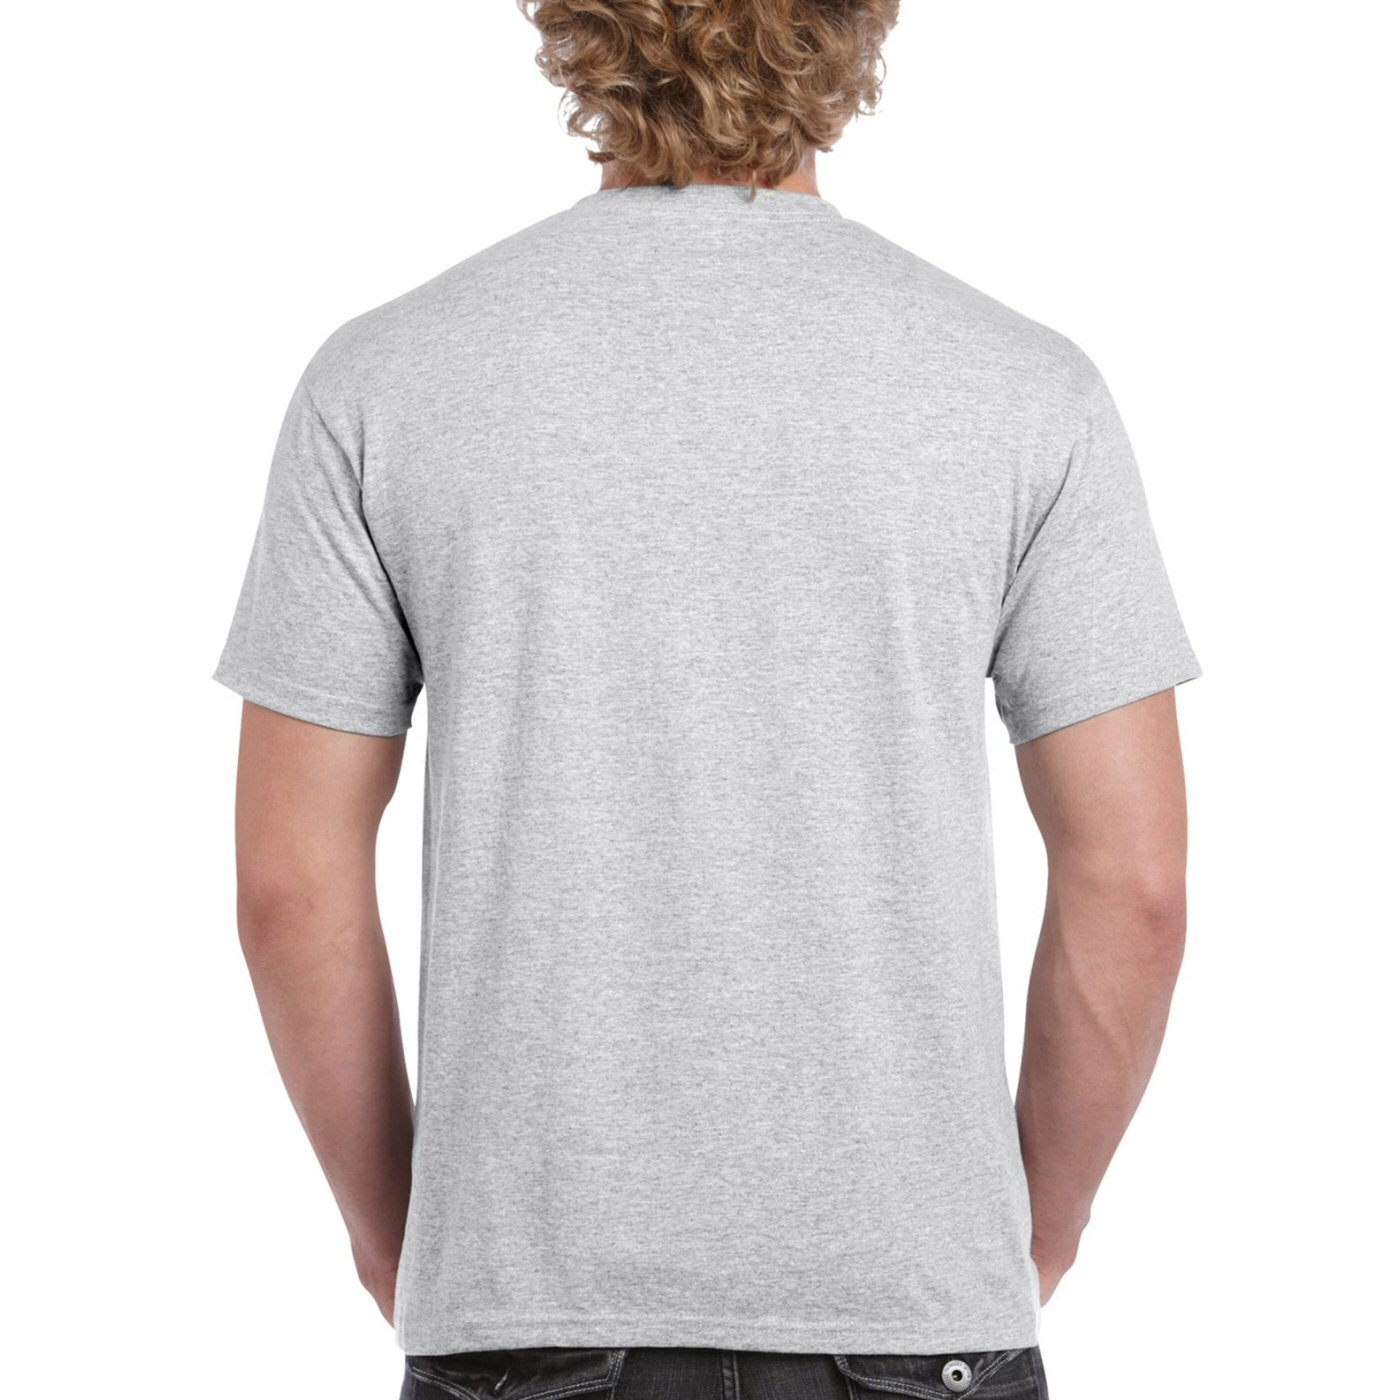 Fealty Men's White Melange T-shirt - Stylish & Eco-Friendly